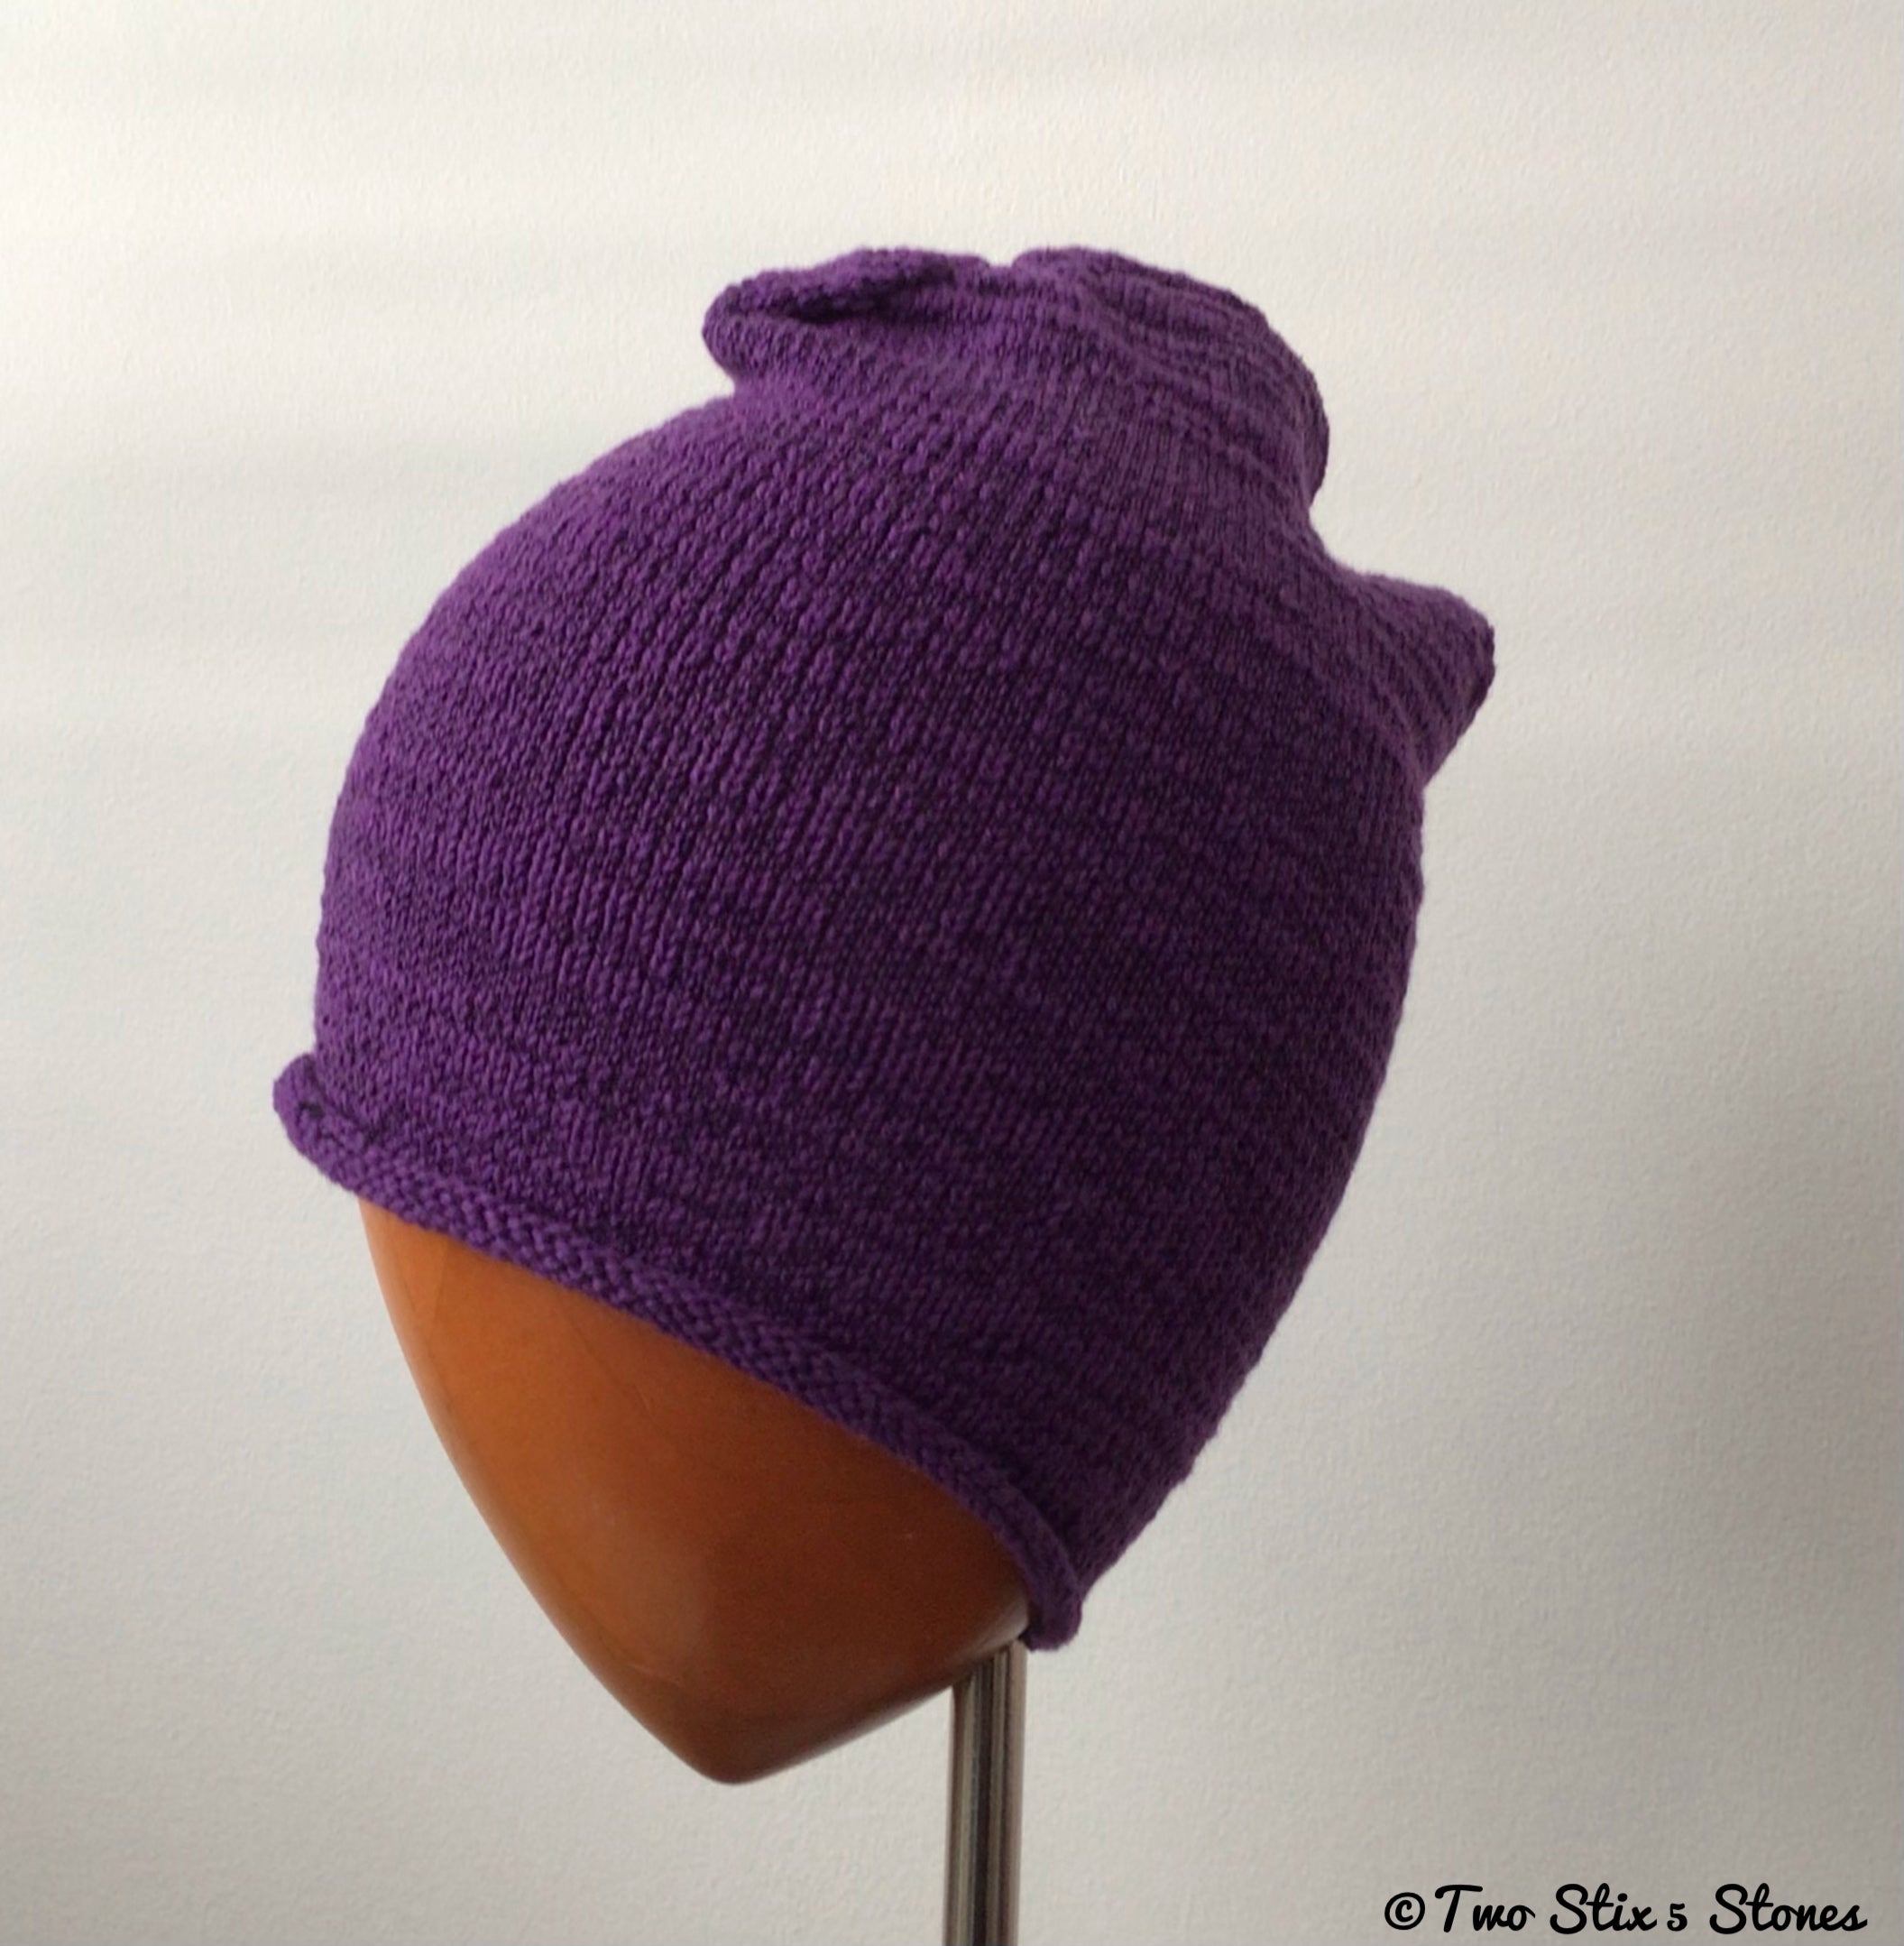 Purple Knit Beanie